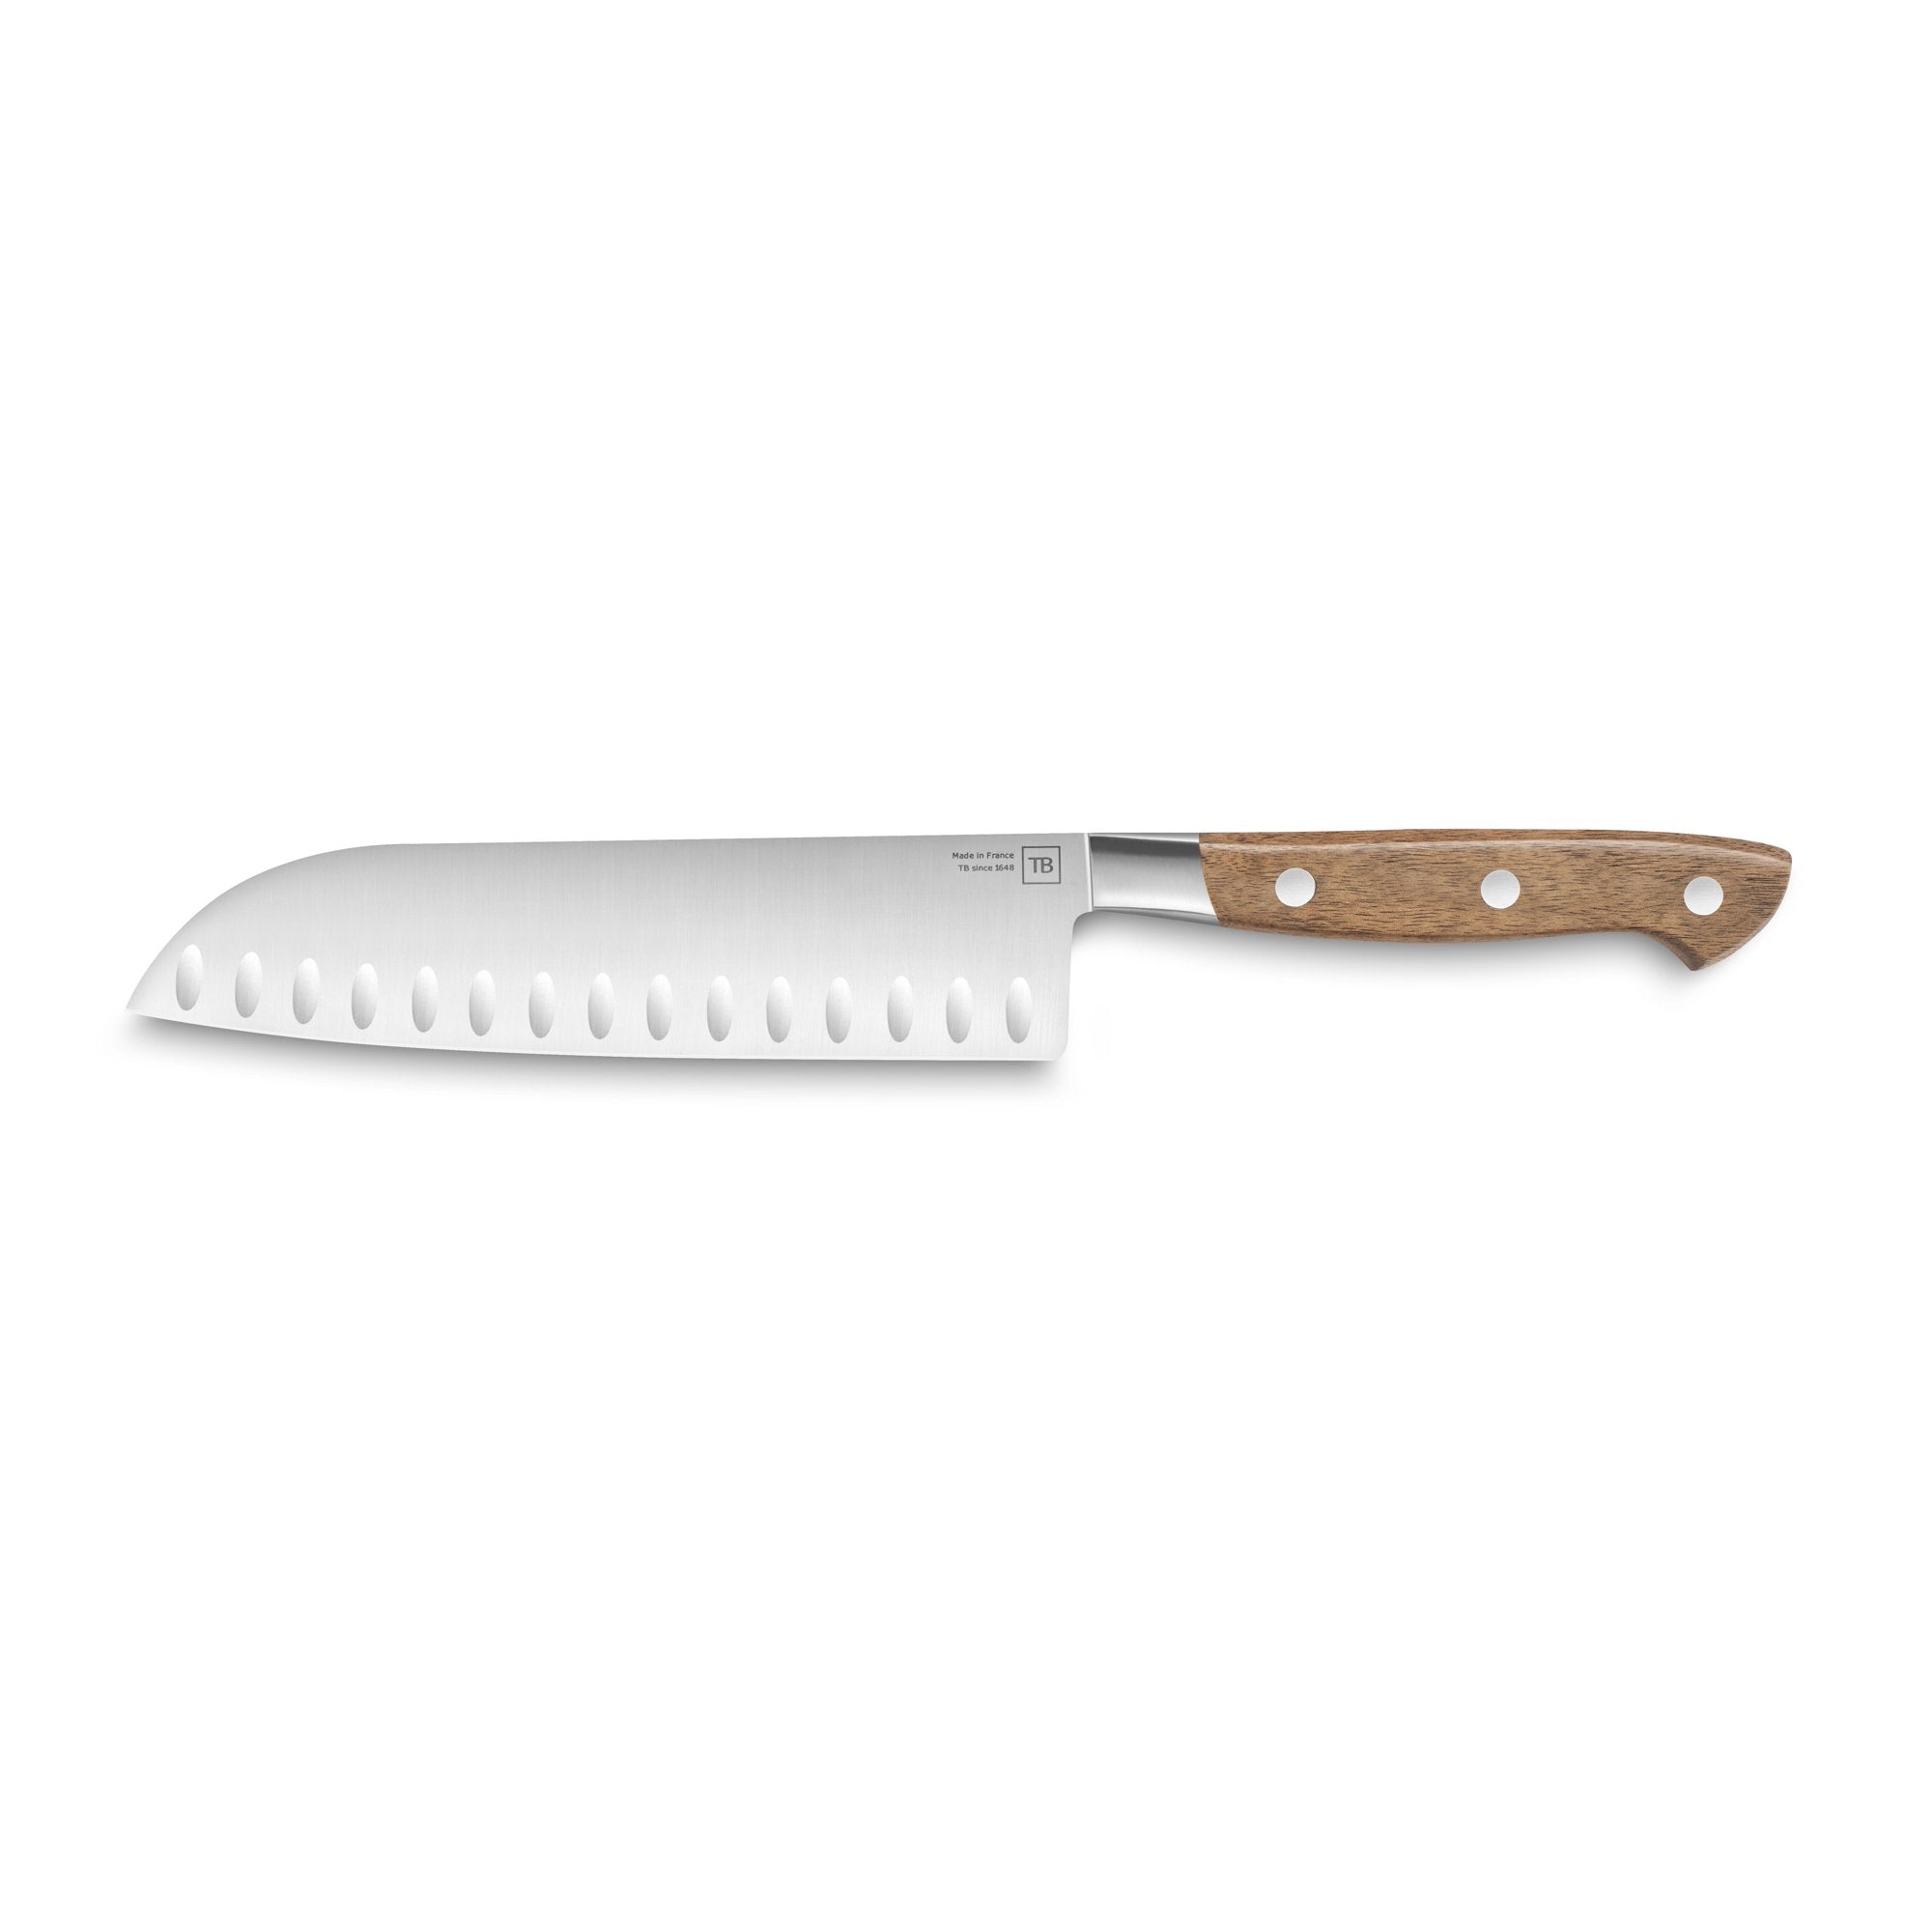 TB Tarrerias Bonjean - Georges - 6 Piece Kitchen Knife Block Set With Walnut Handles